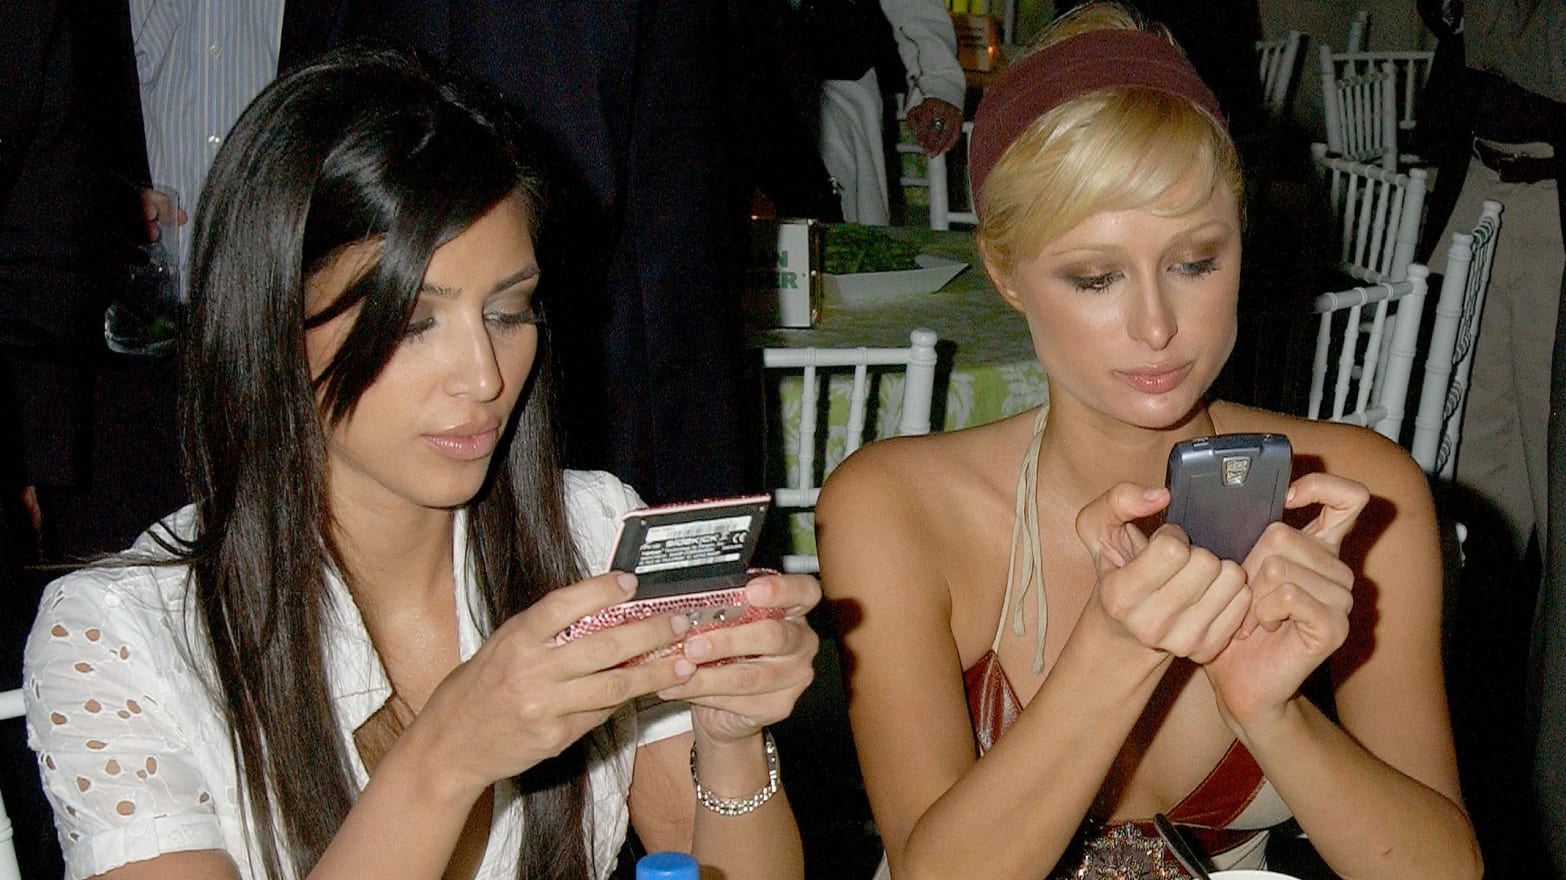 Kim Kardashian Says She Owes Her Career to Paris Hilton